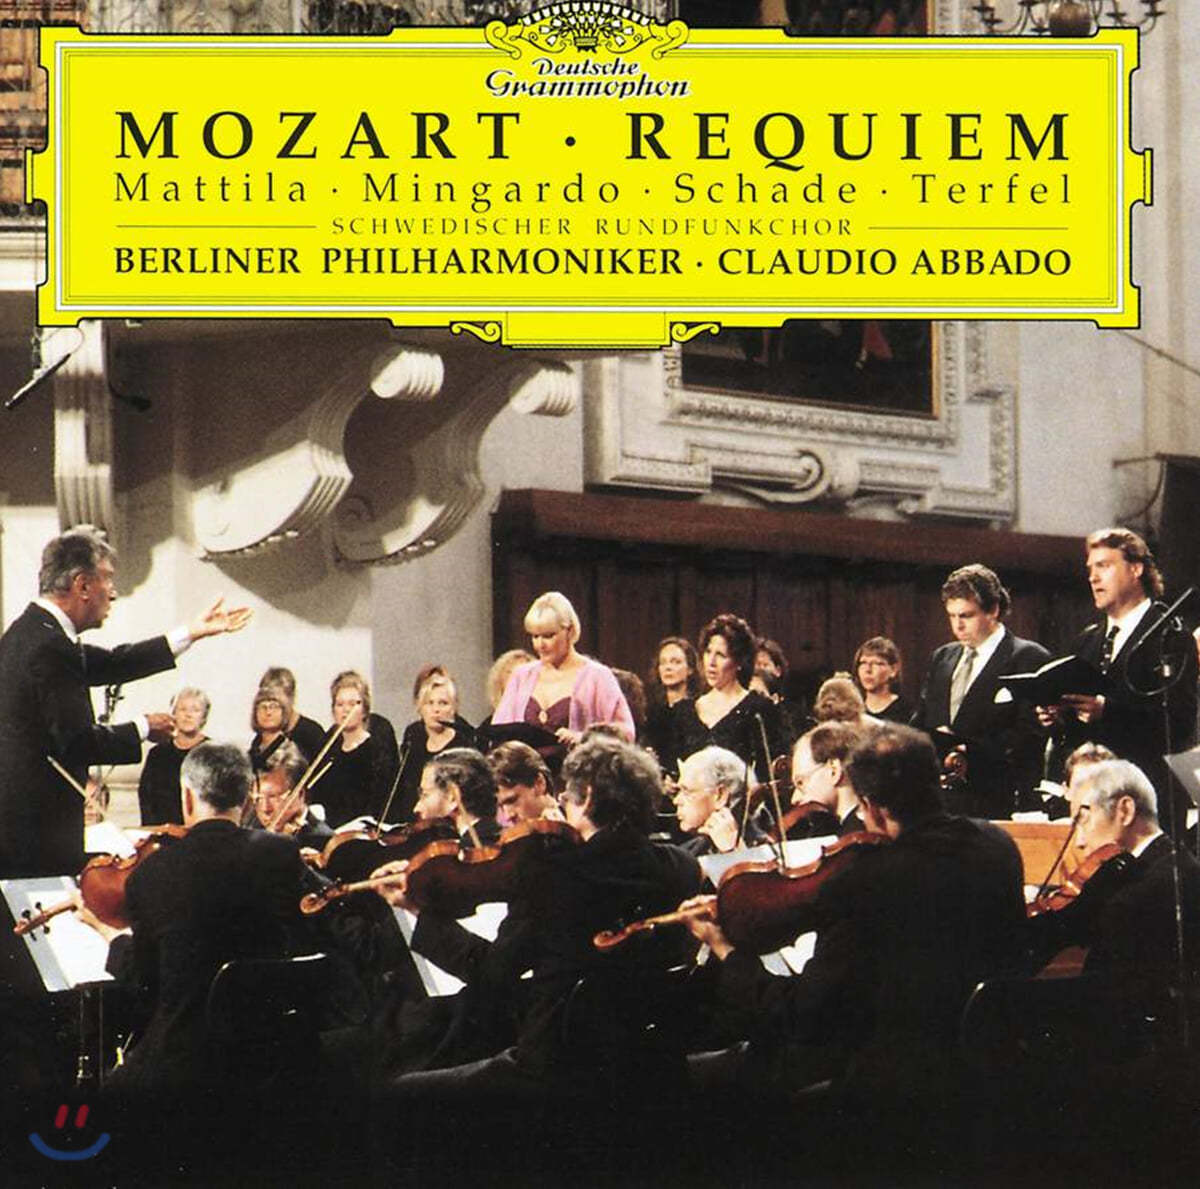 Claudio Abbado 모차르트: 레퀴엠 (Mozart: Requiem)